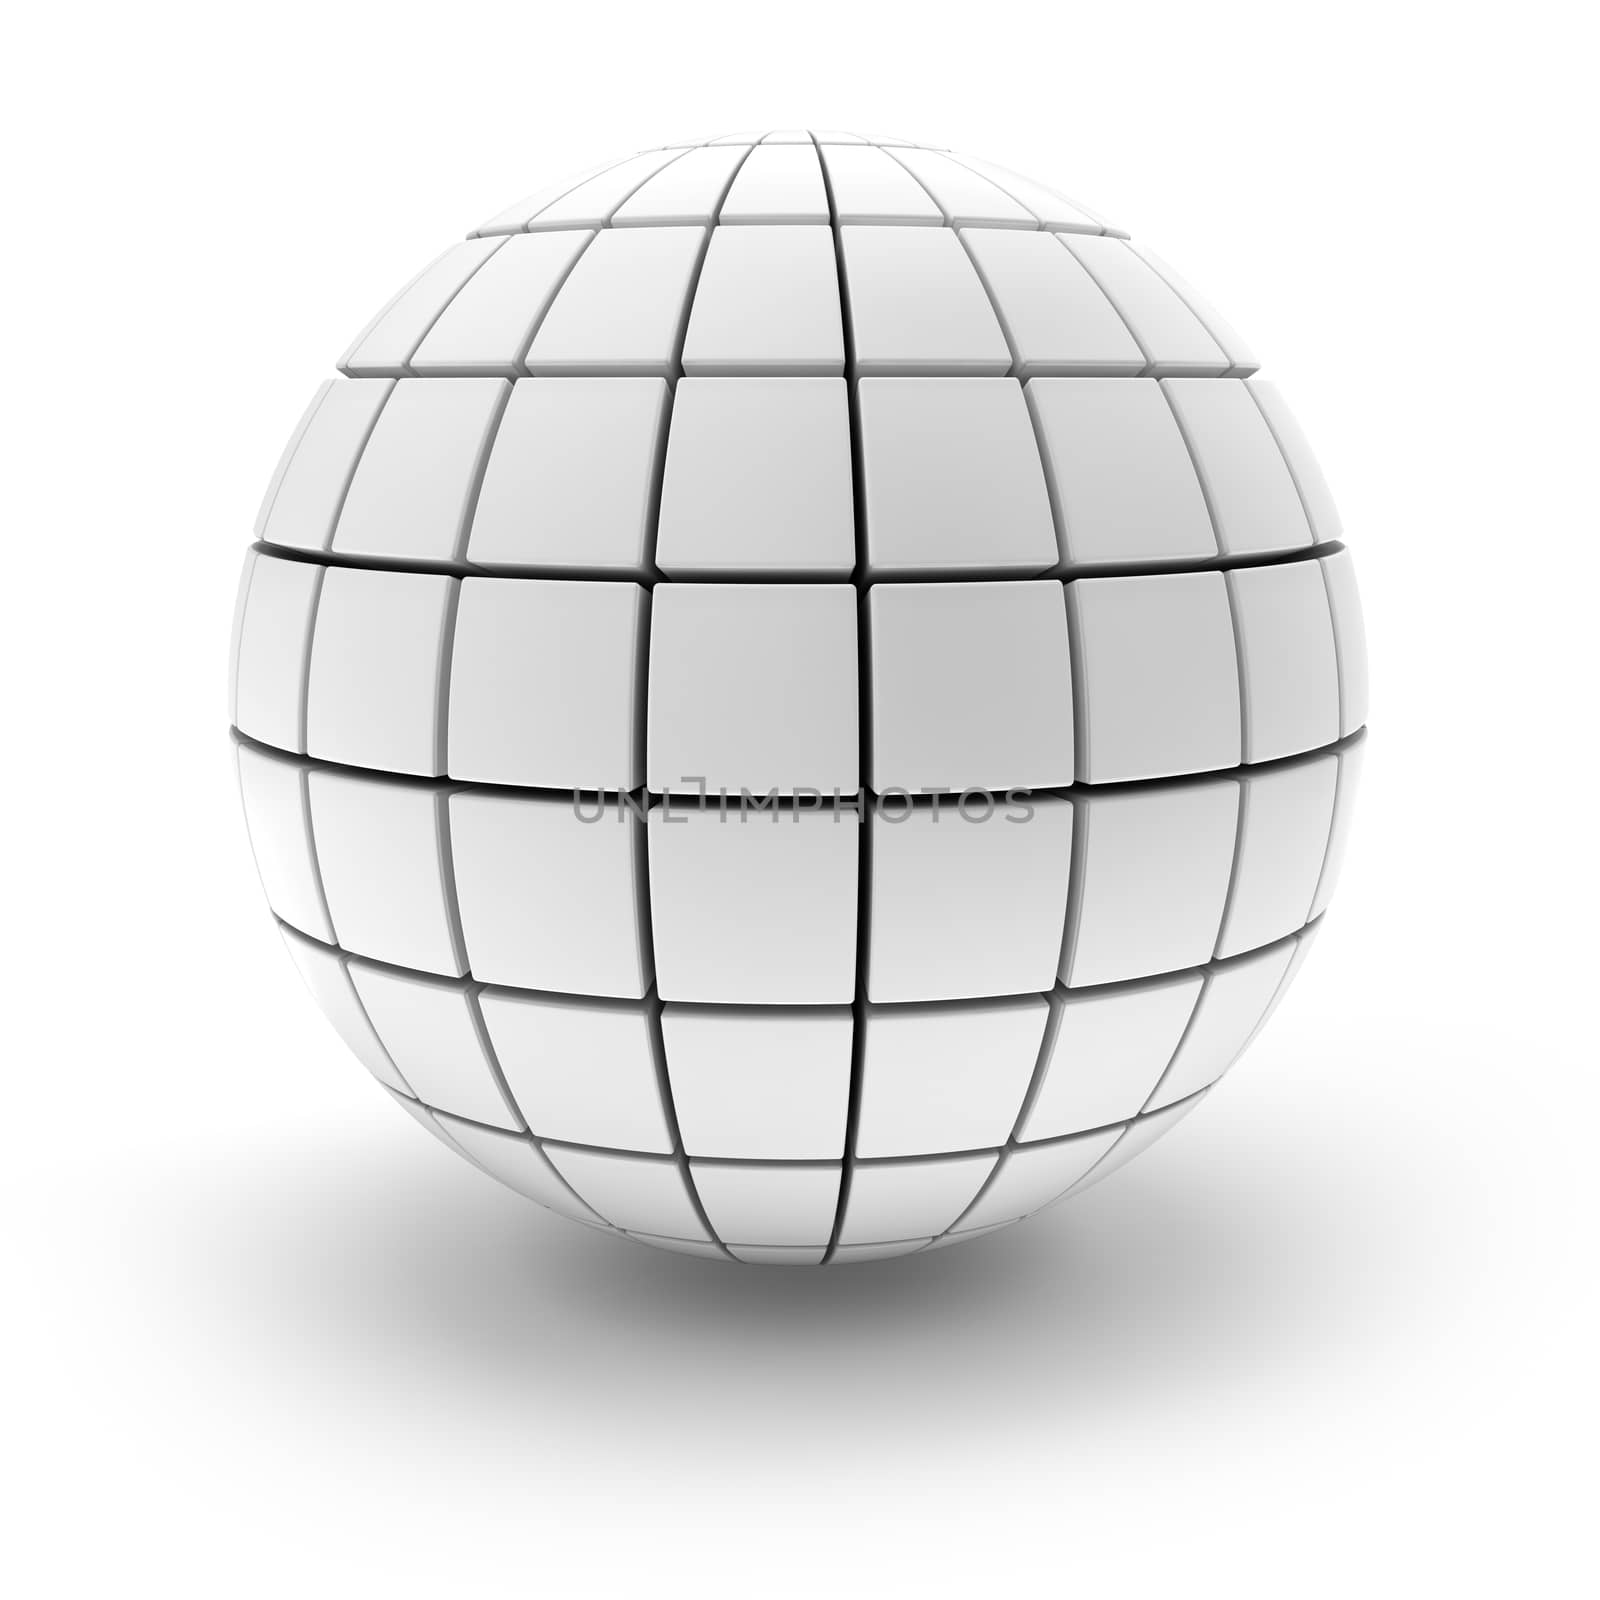 Blank sphere formed by blocks, 3d render, white background